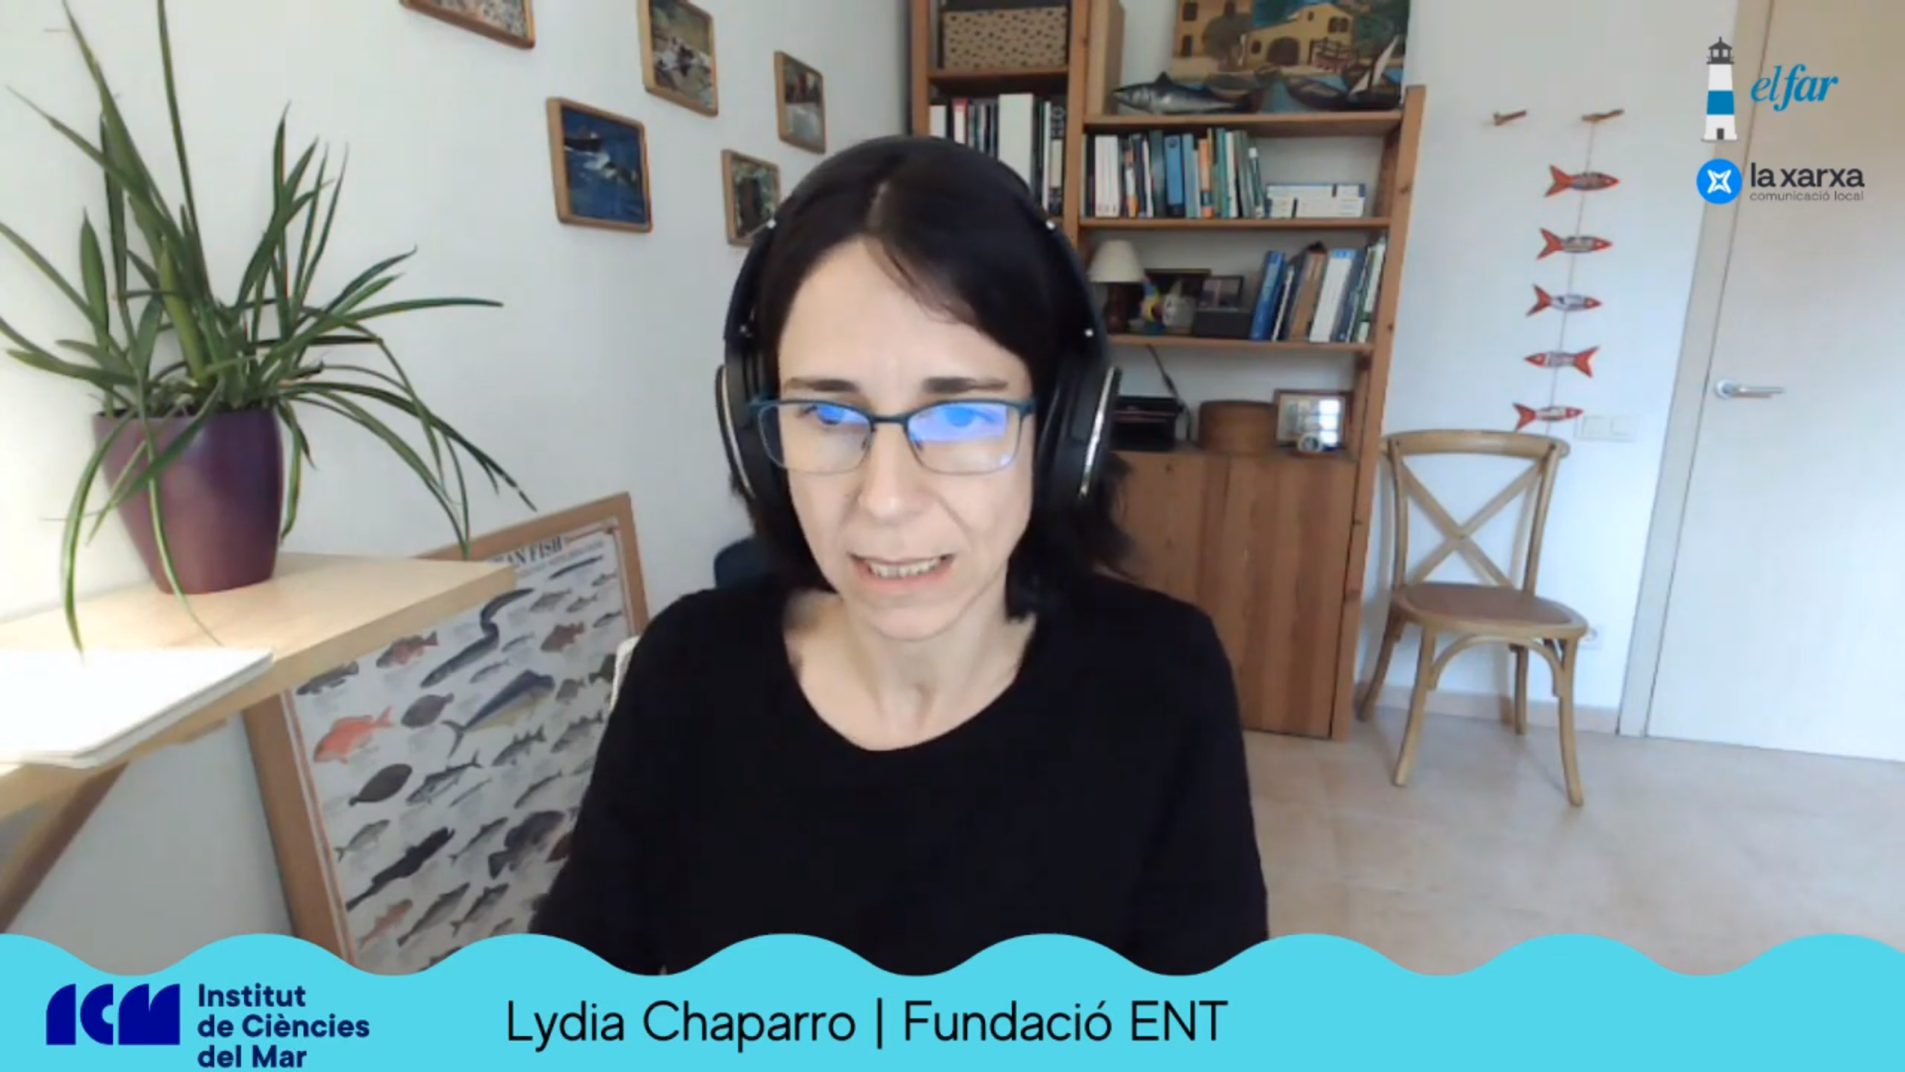 Lydia Chaparro (Fundació ENT) participa en el Podcast del Instituto de Ciencias del Mar (CSIC) y Ràdio el Far